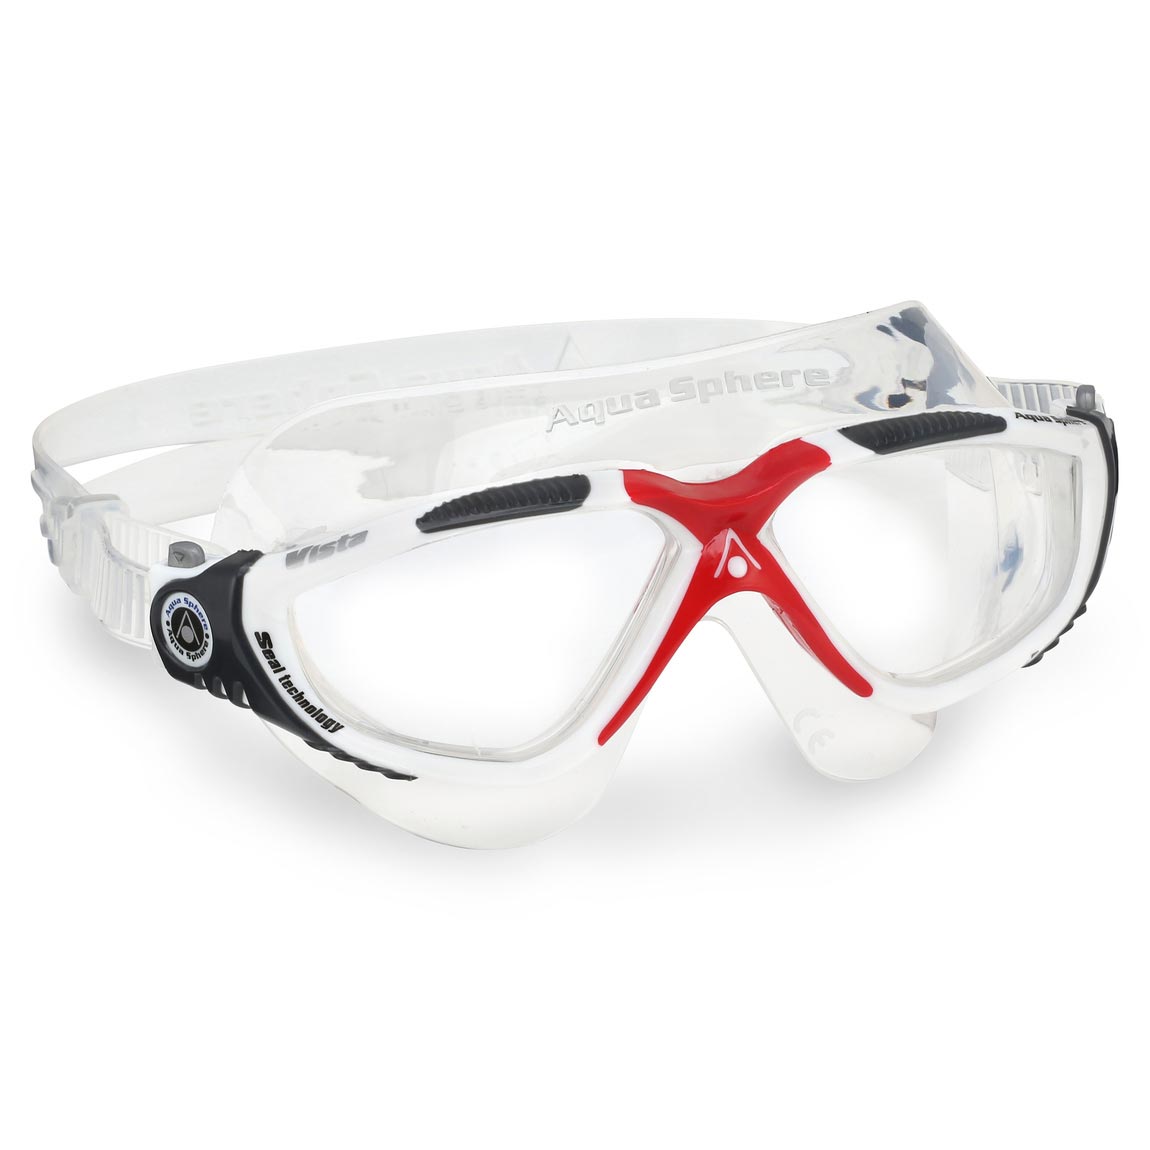 Aquasphere Senior Vista Goggles